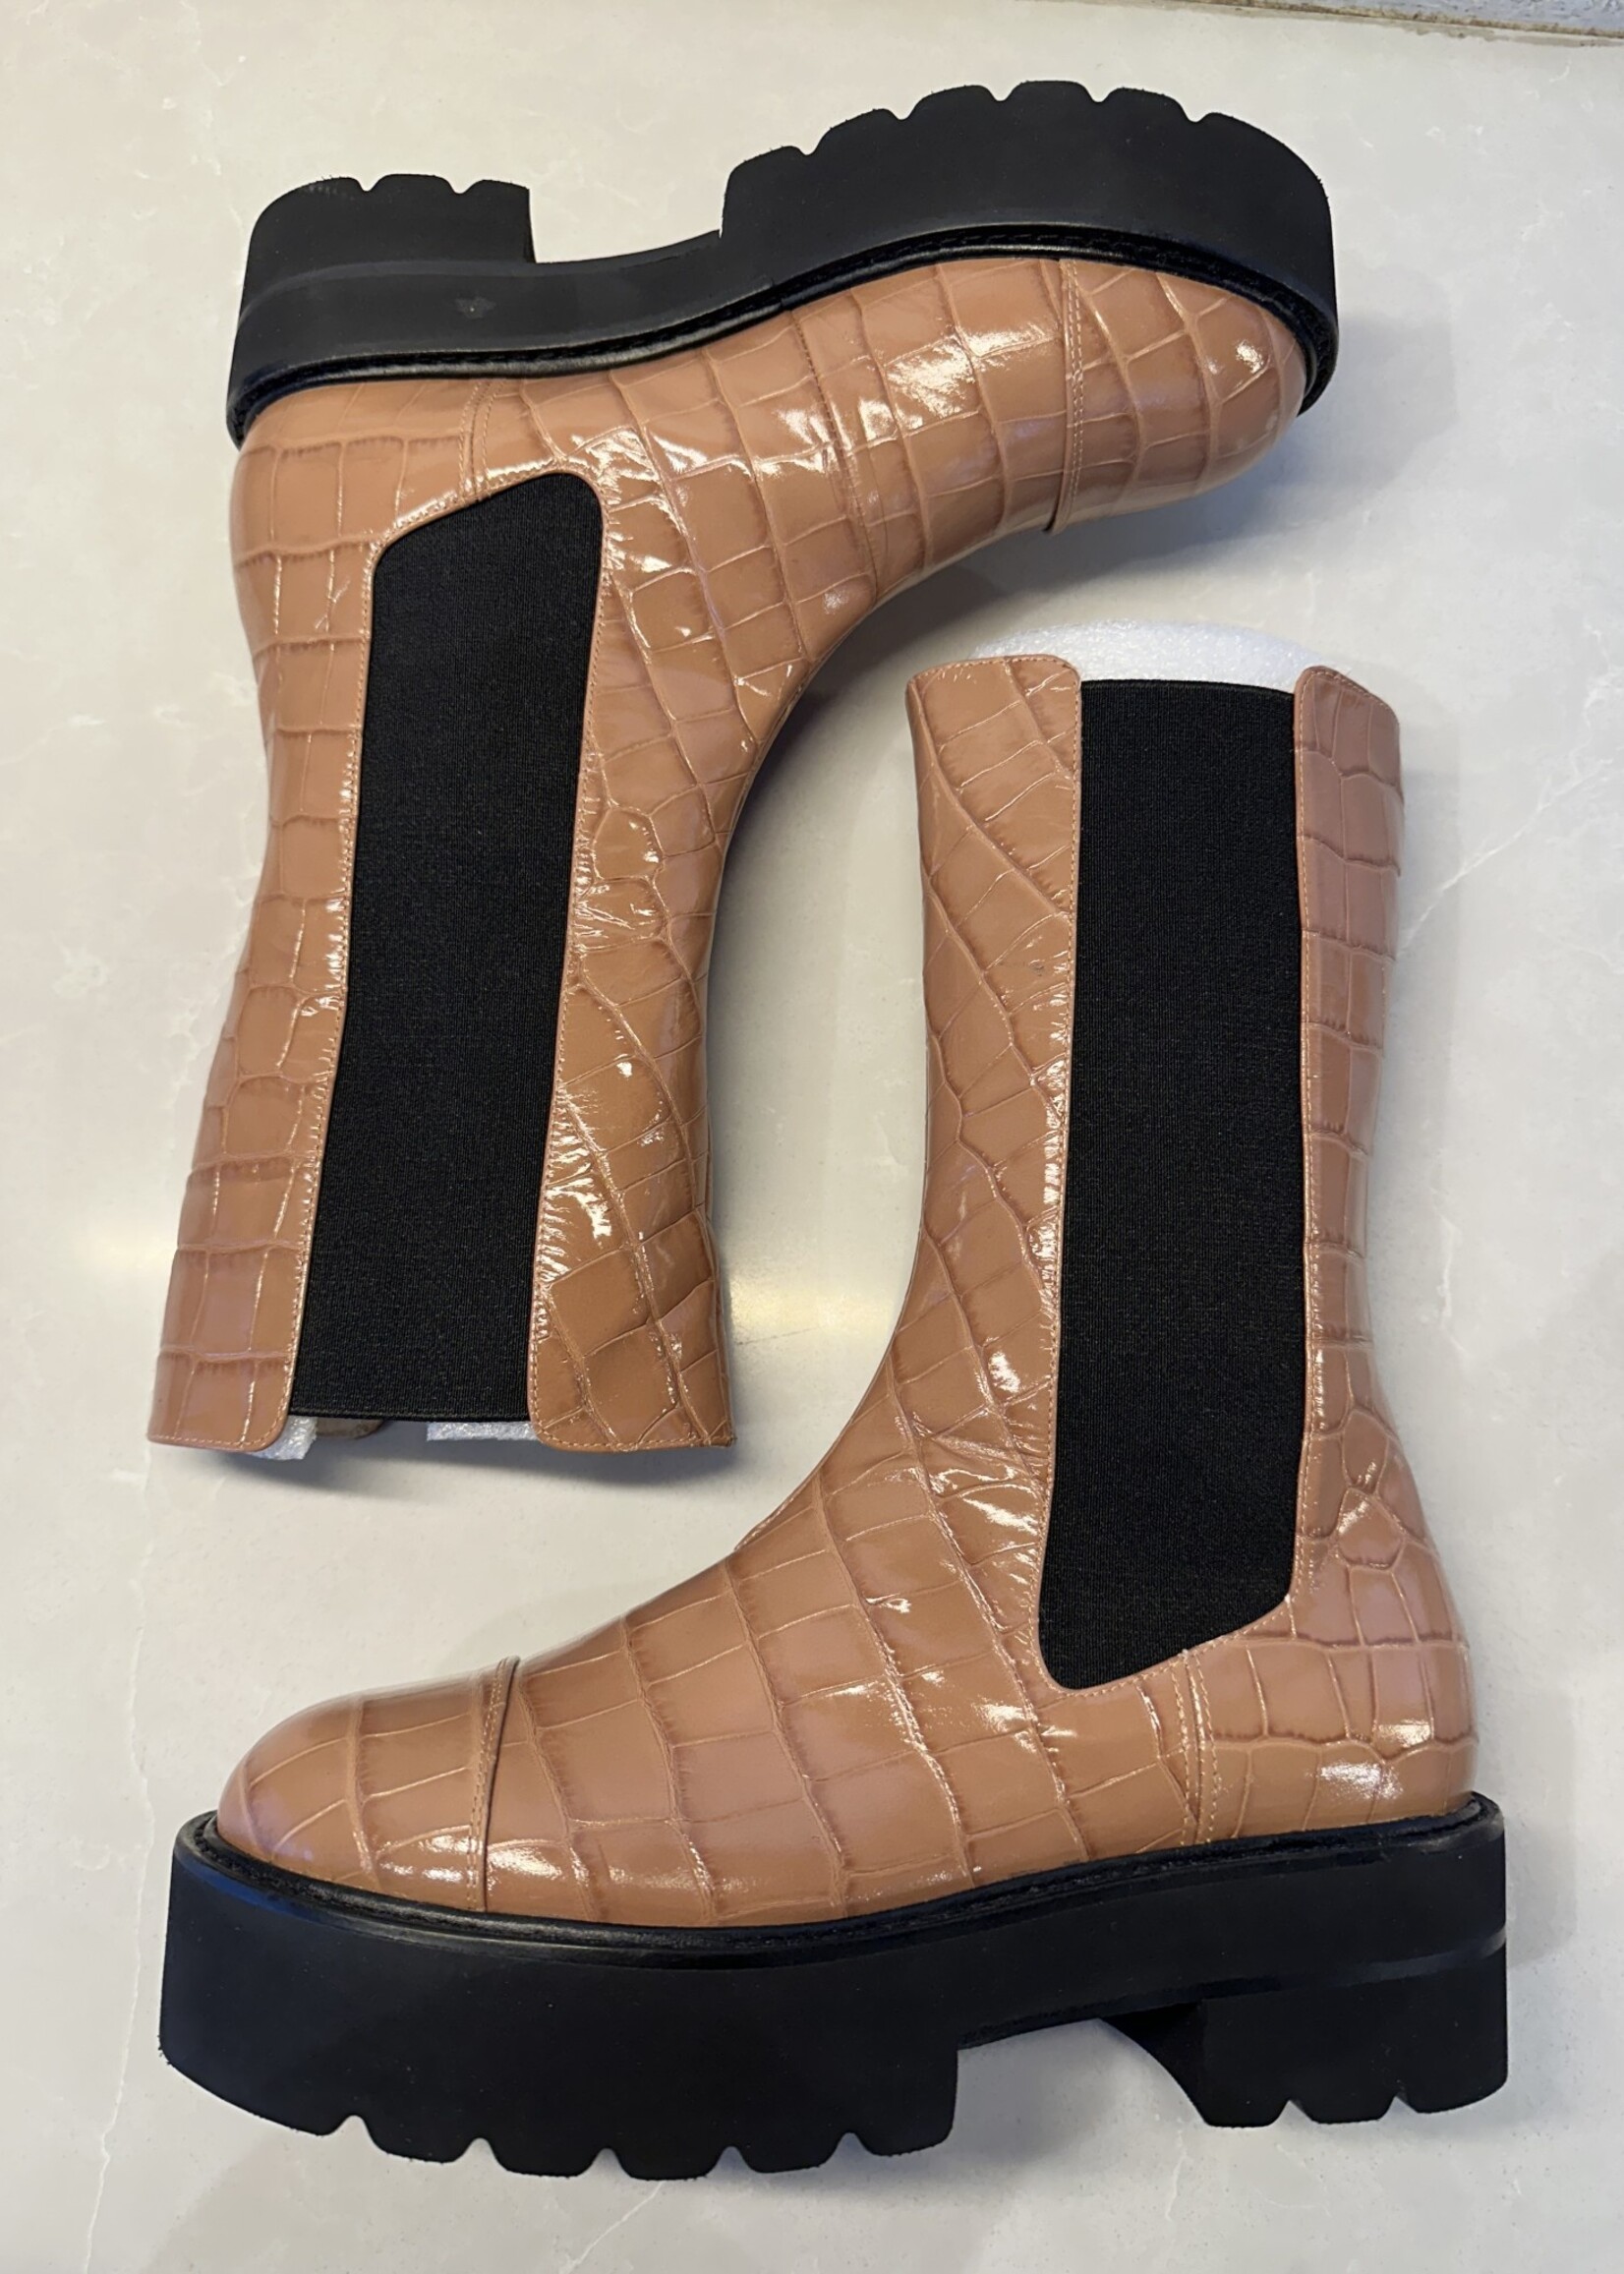 New Stuart Weitzman Croc Chelsea Boots 6.5